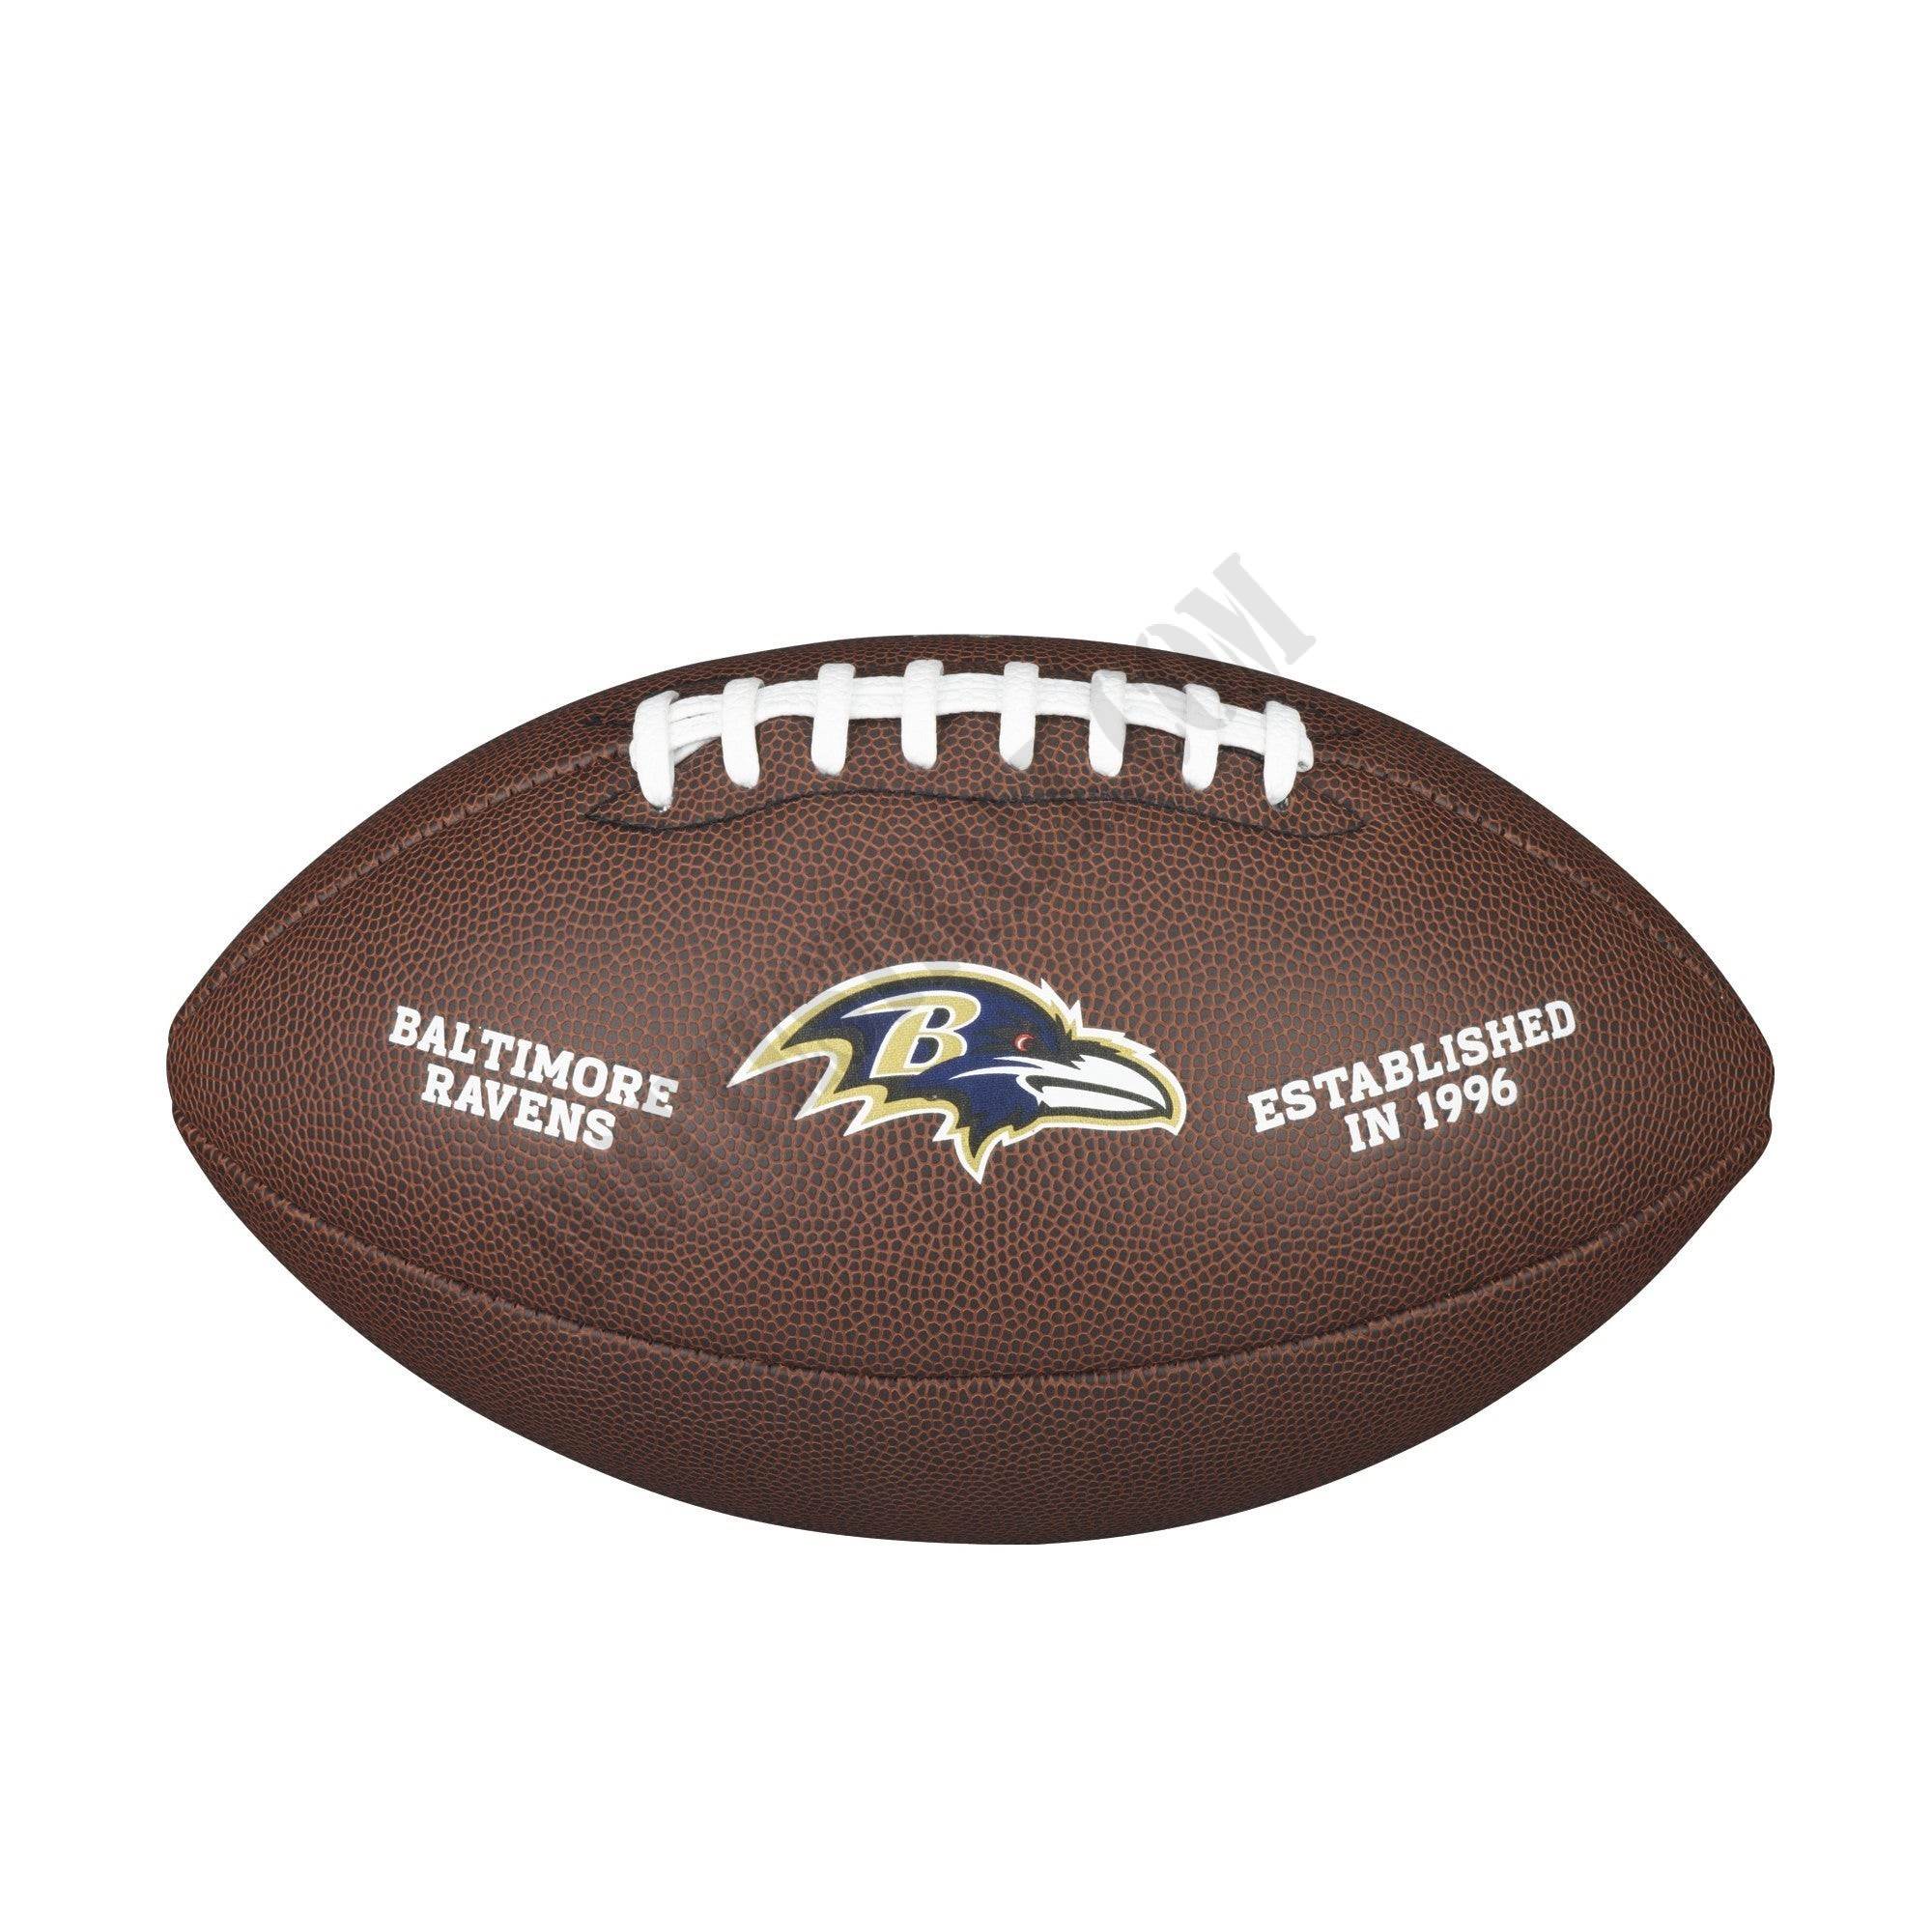 NFL Backyard Legend Football - Baltimore Ravens ● Wilson Promotions - NFL Backyard Legend Football - Baltimore Ravens ● Wilson Promotions